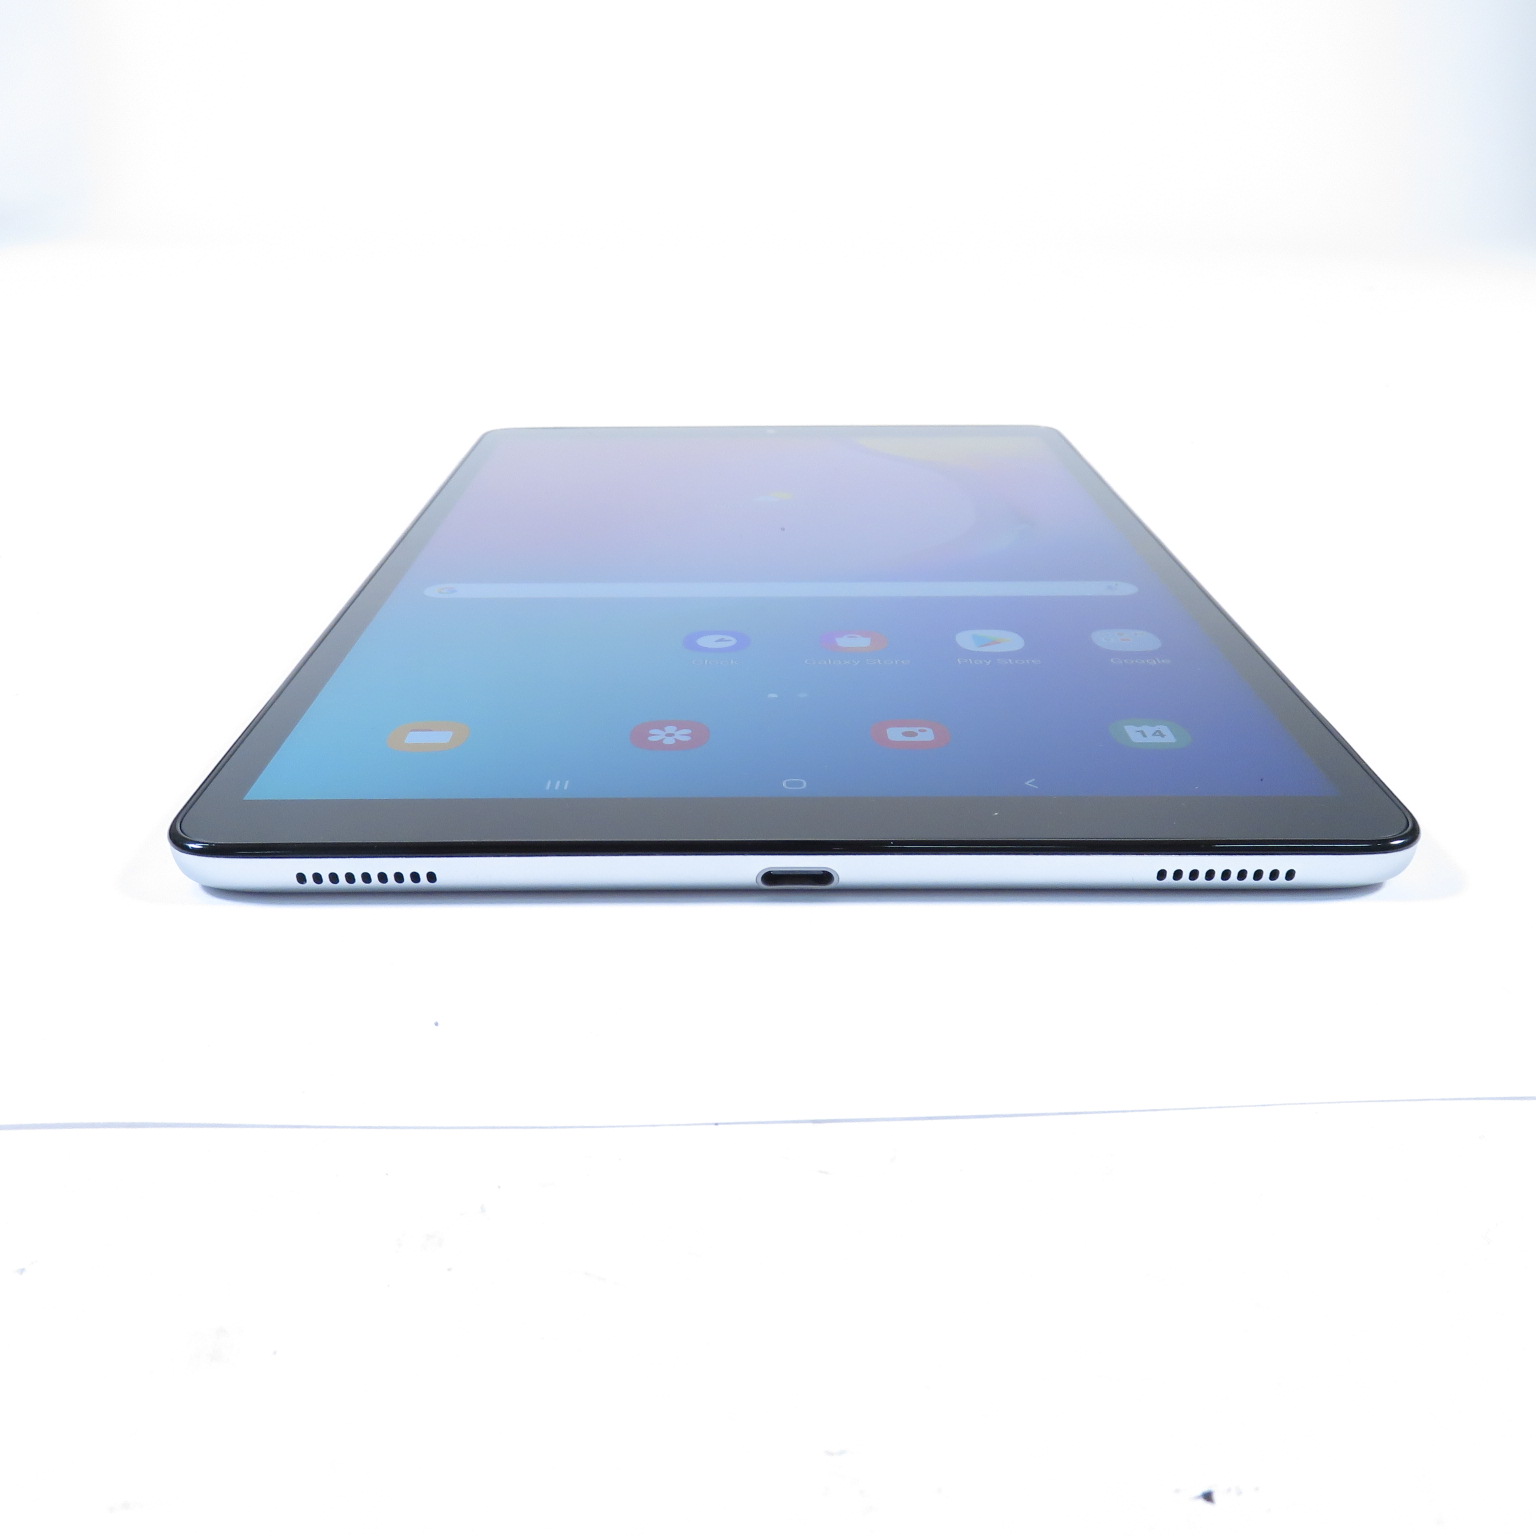 SAMSUNG Galaxy Tab A (2019,Wi-Fi) SM-T510 32GB 10.1 Wi-Fi only Tablet -  International Version (Black)